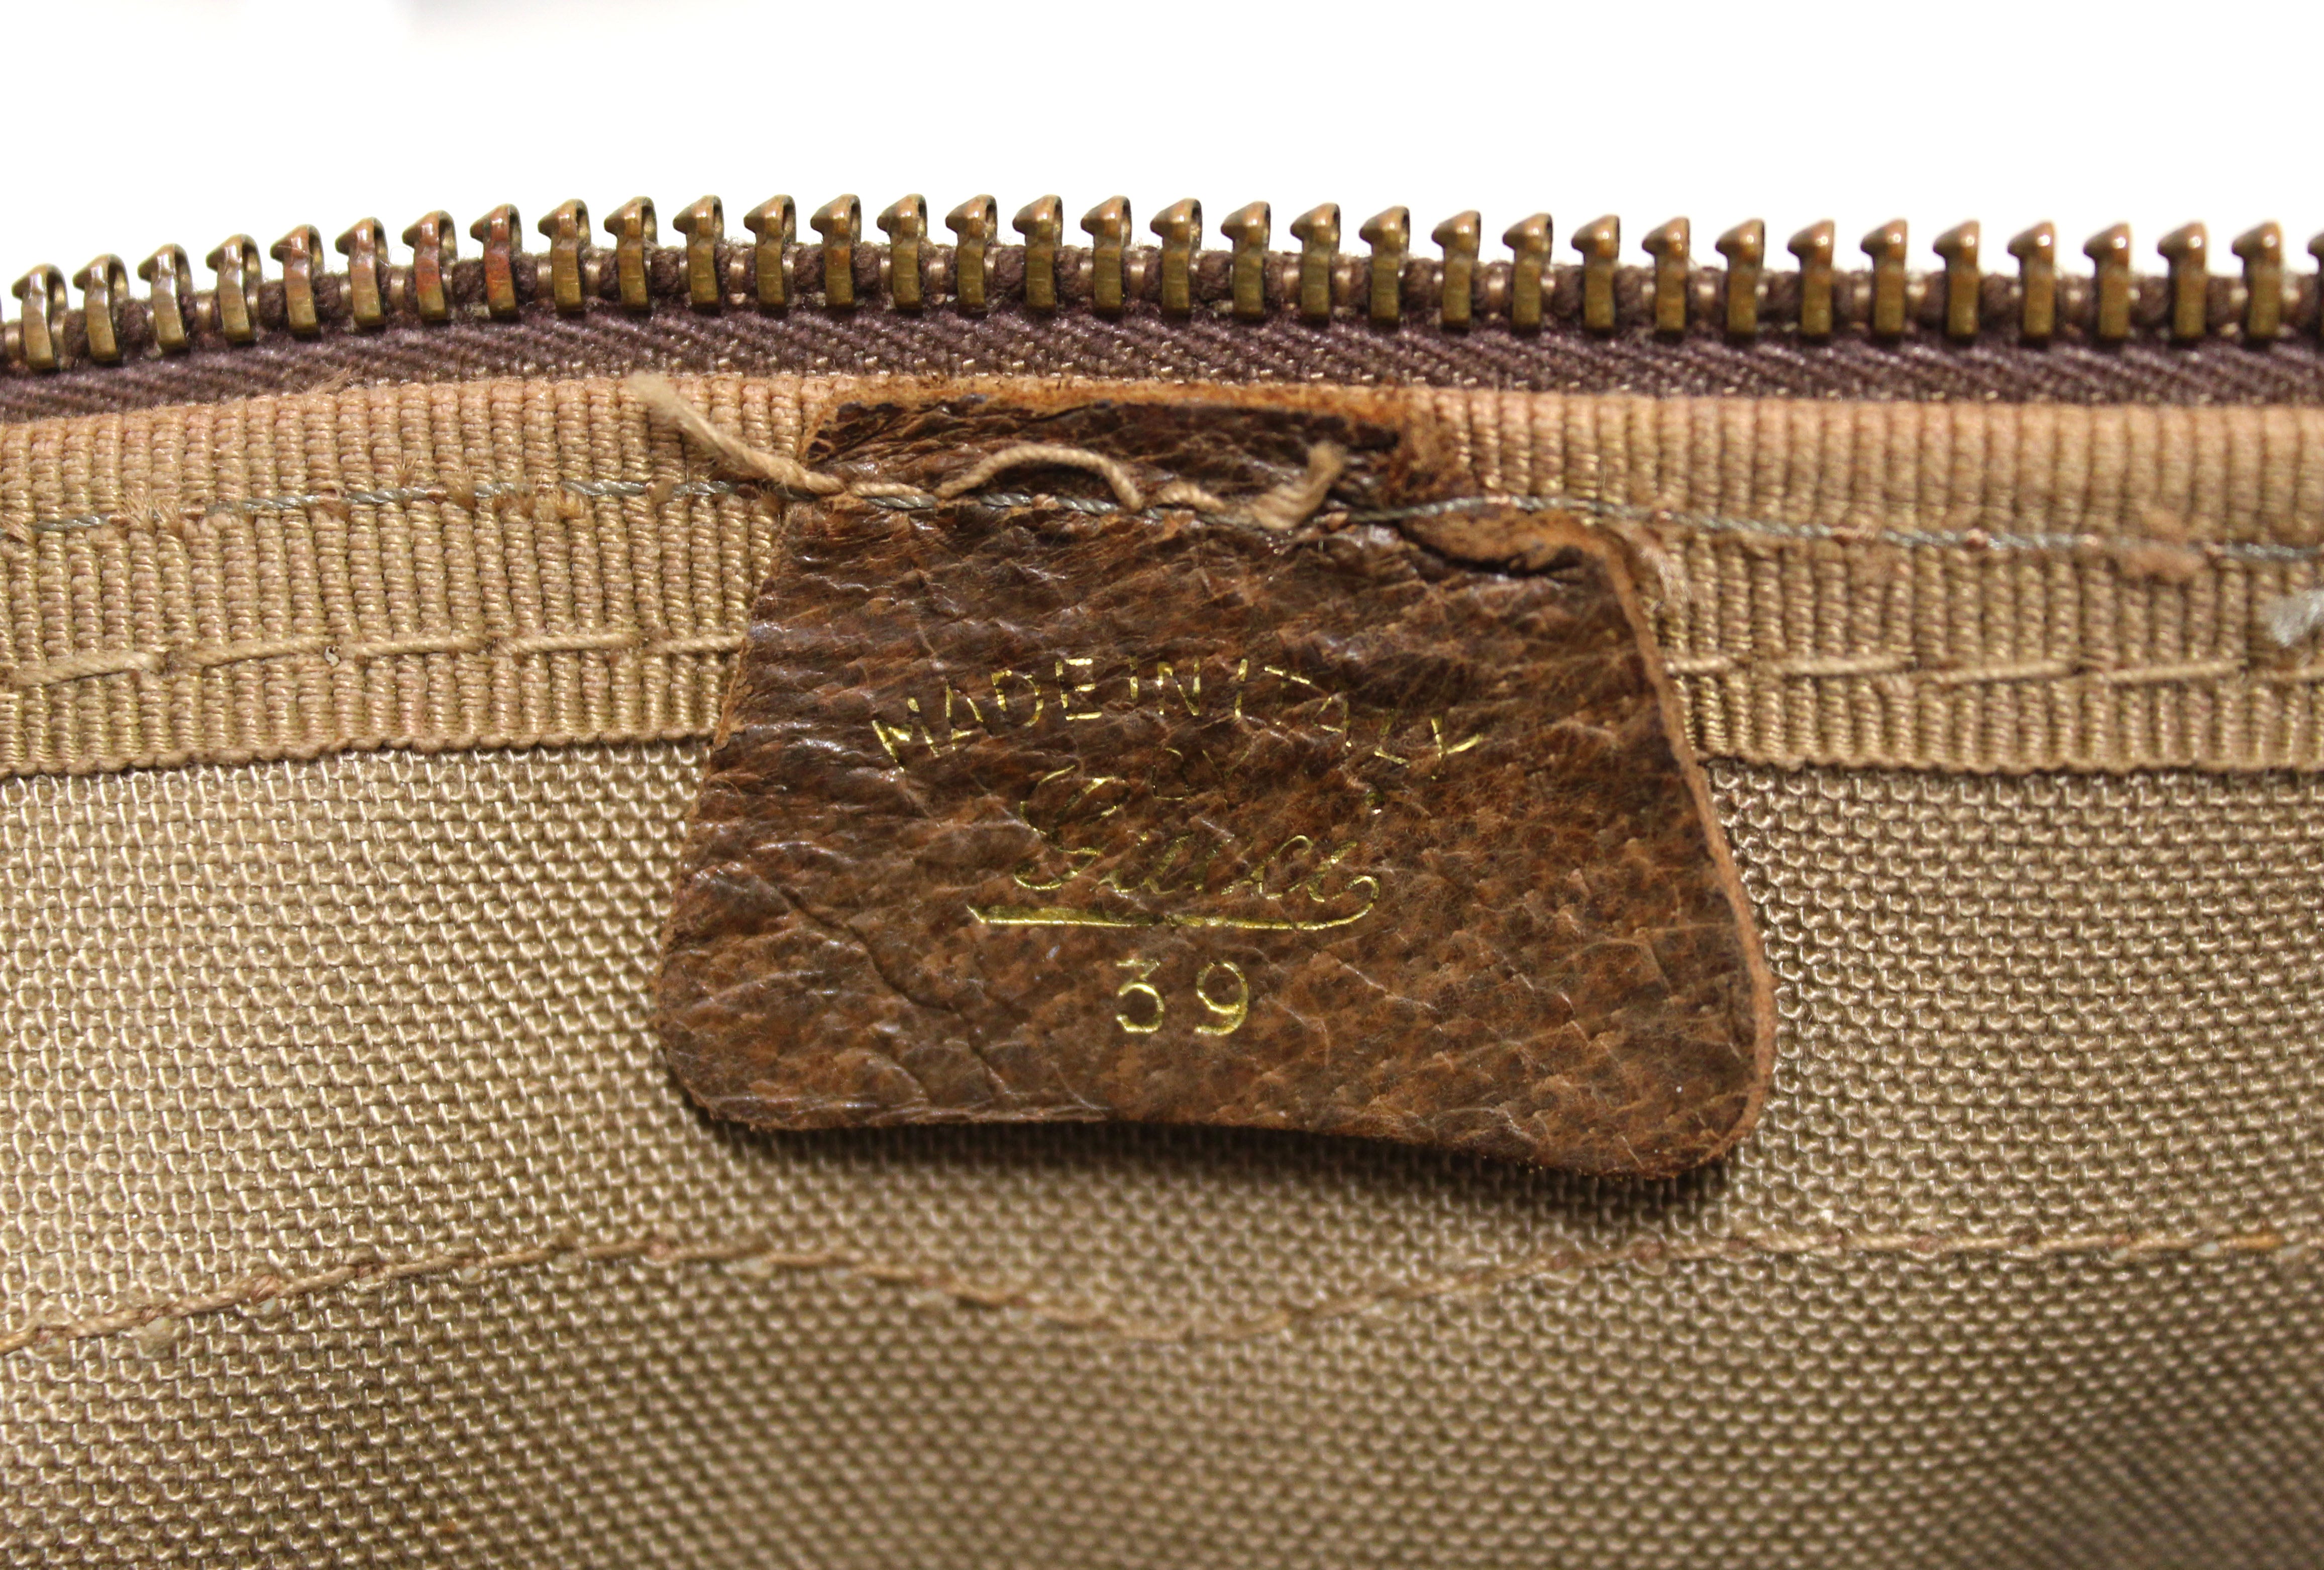 111.02.073 GG Supreme Duffle Bag With Strap Vintage – Keeks Designer  Handbags